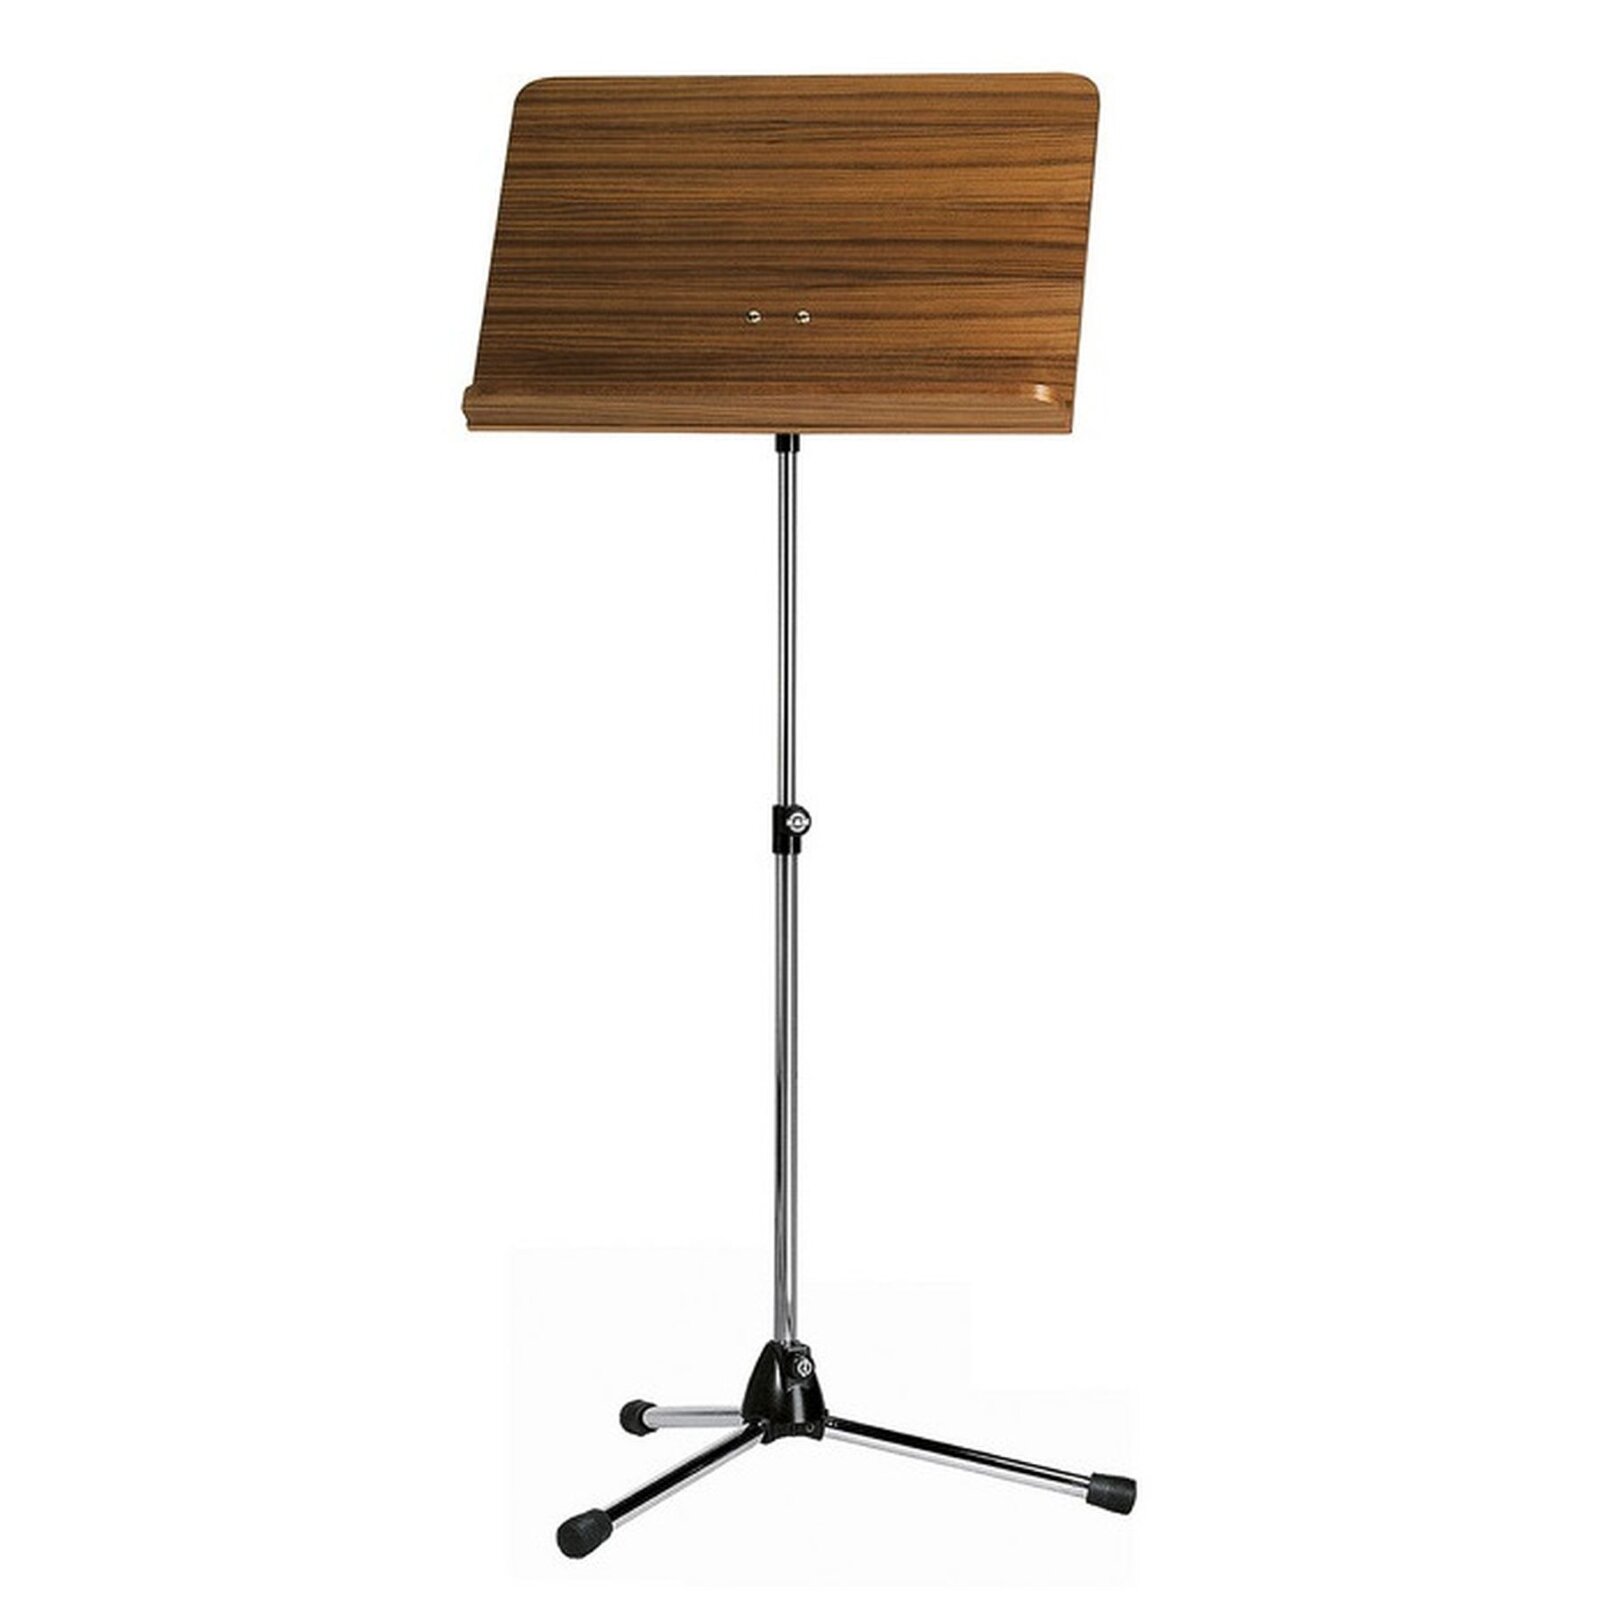 K & M 118/1 Orchestra music stand - Chrome stand Walnut wooden desk : photo 1